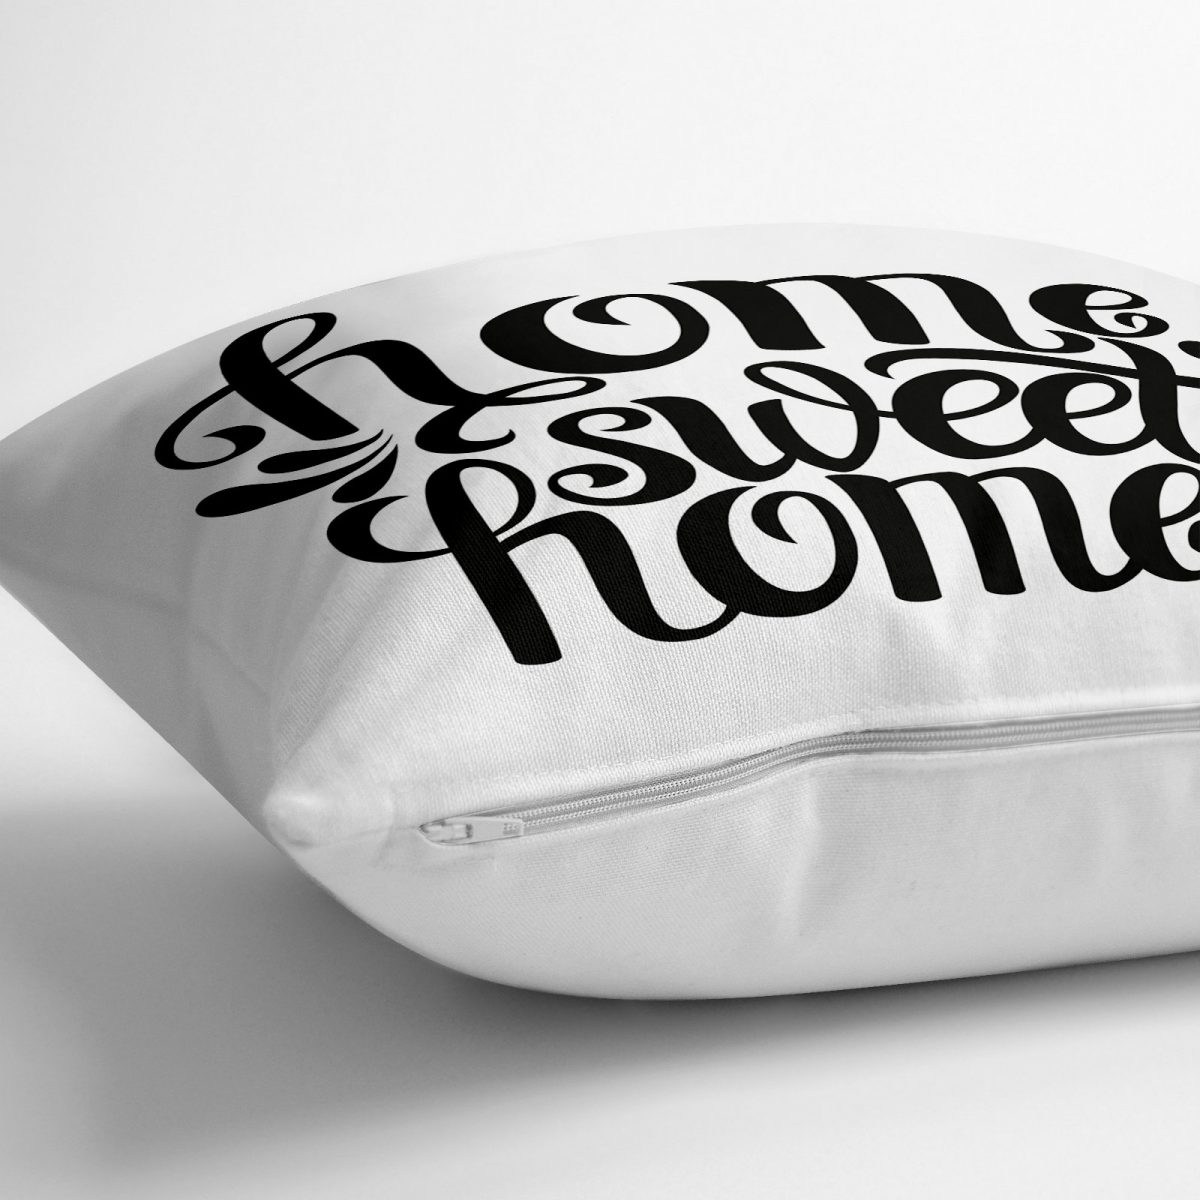 Home Sweet Home Dijital Baskılı Dekoratif Yer Minderi - 70 x 70 cm Realhomes